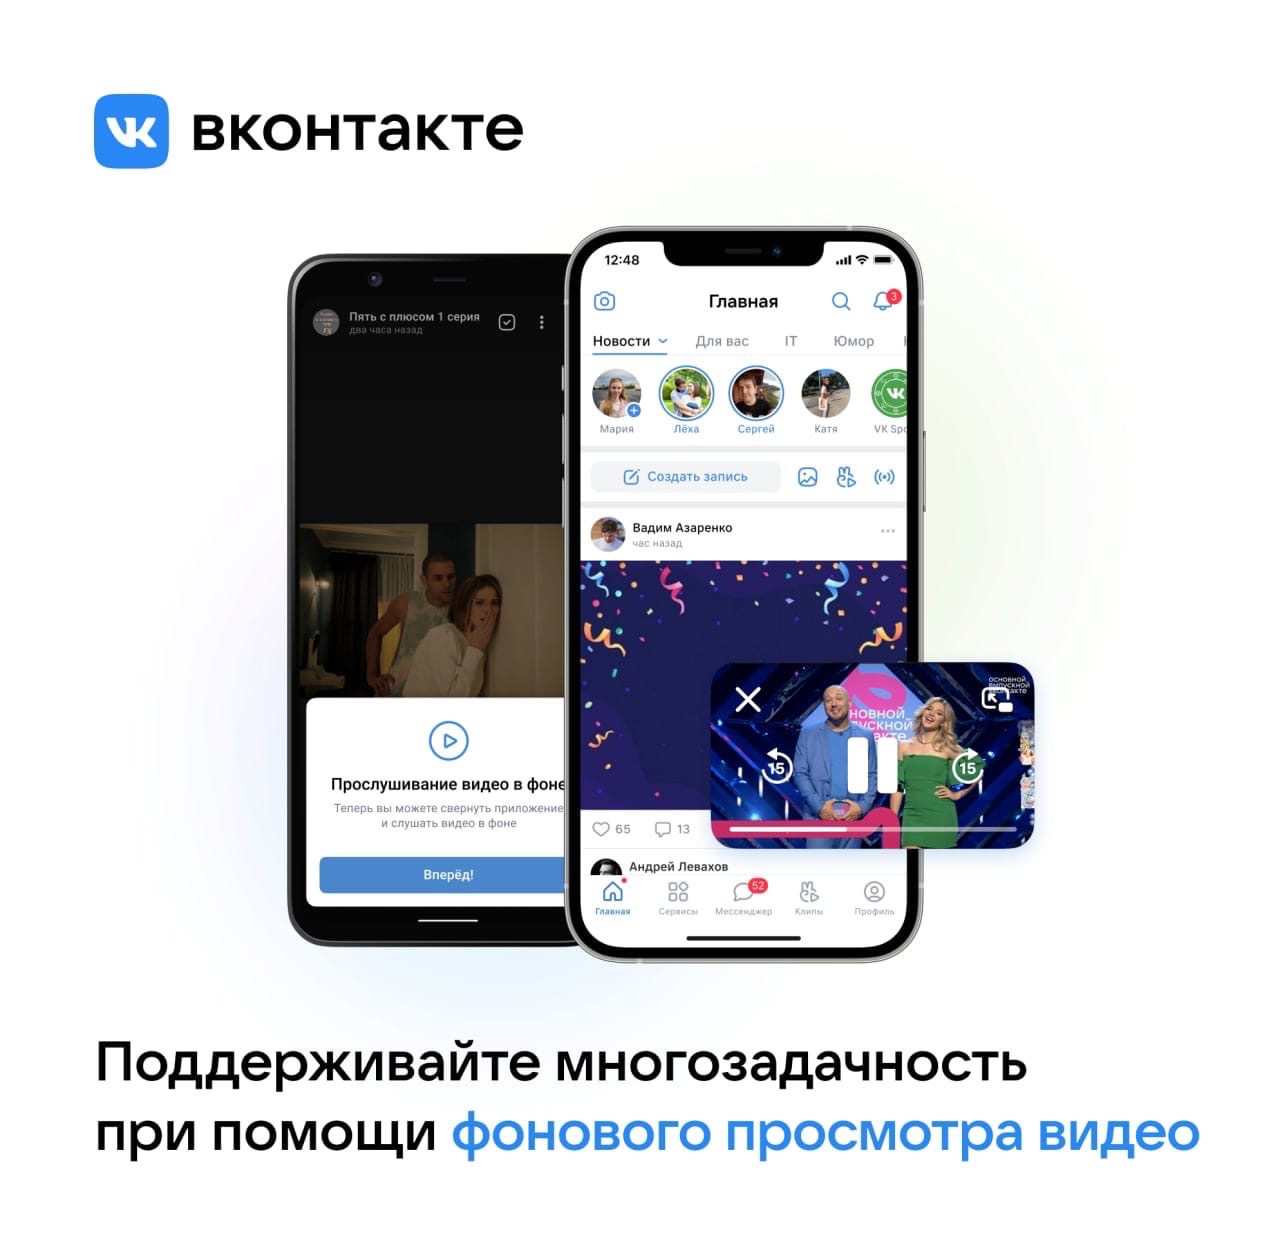 ВКонтакте запустил большое обновление видеоплатформы, Miracle, 21 авг 2021, 17:56, ctnstyqbhtzpzy xkxazajnxupepepu trngkgfbhn.jpg